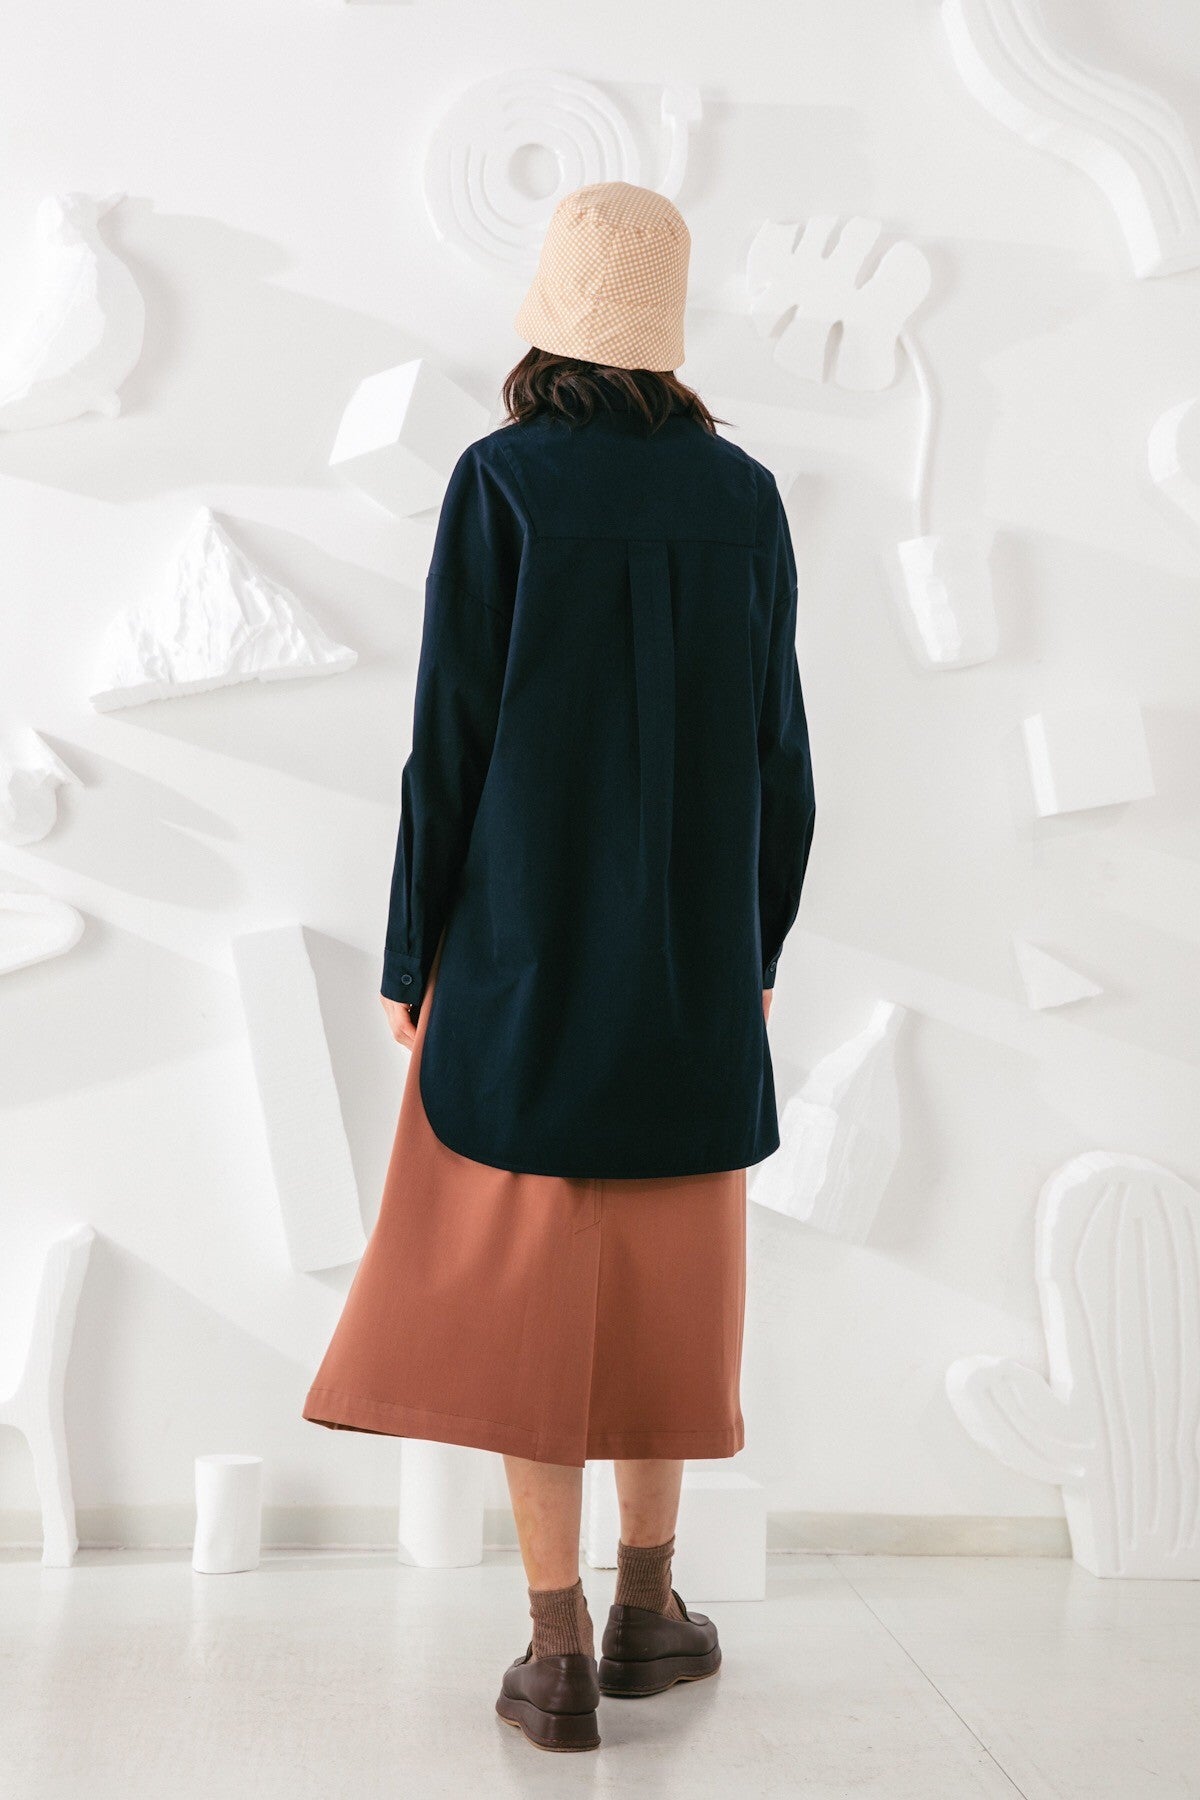 SKYE San Francisco SF shop ethical modern minimalist quality women clothing fashion Brigitte Tunic Shirt blue 4